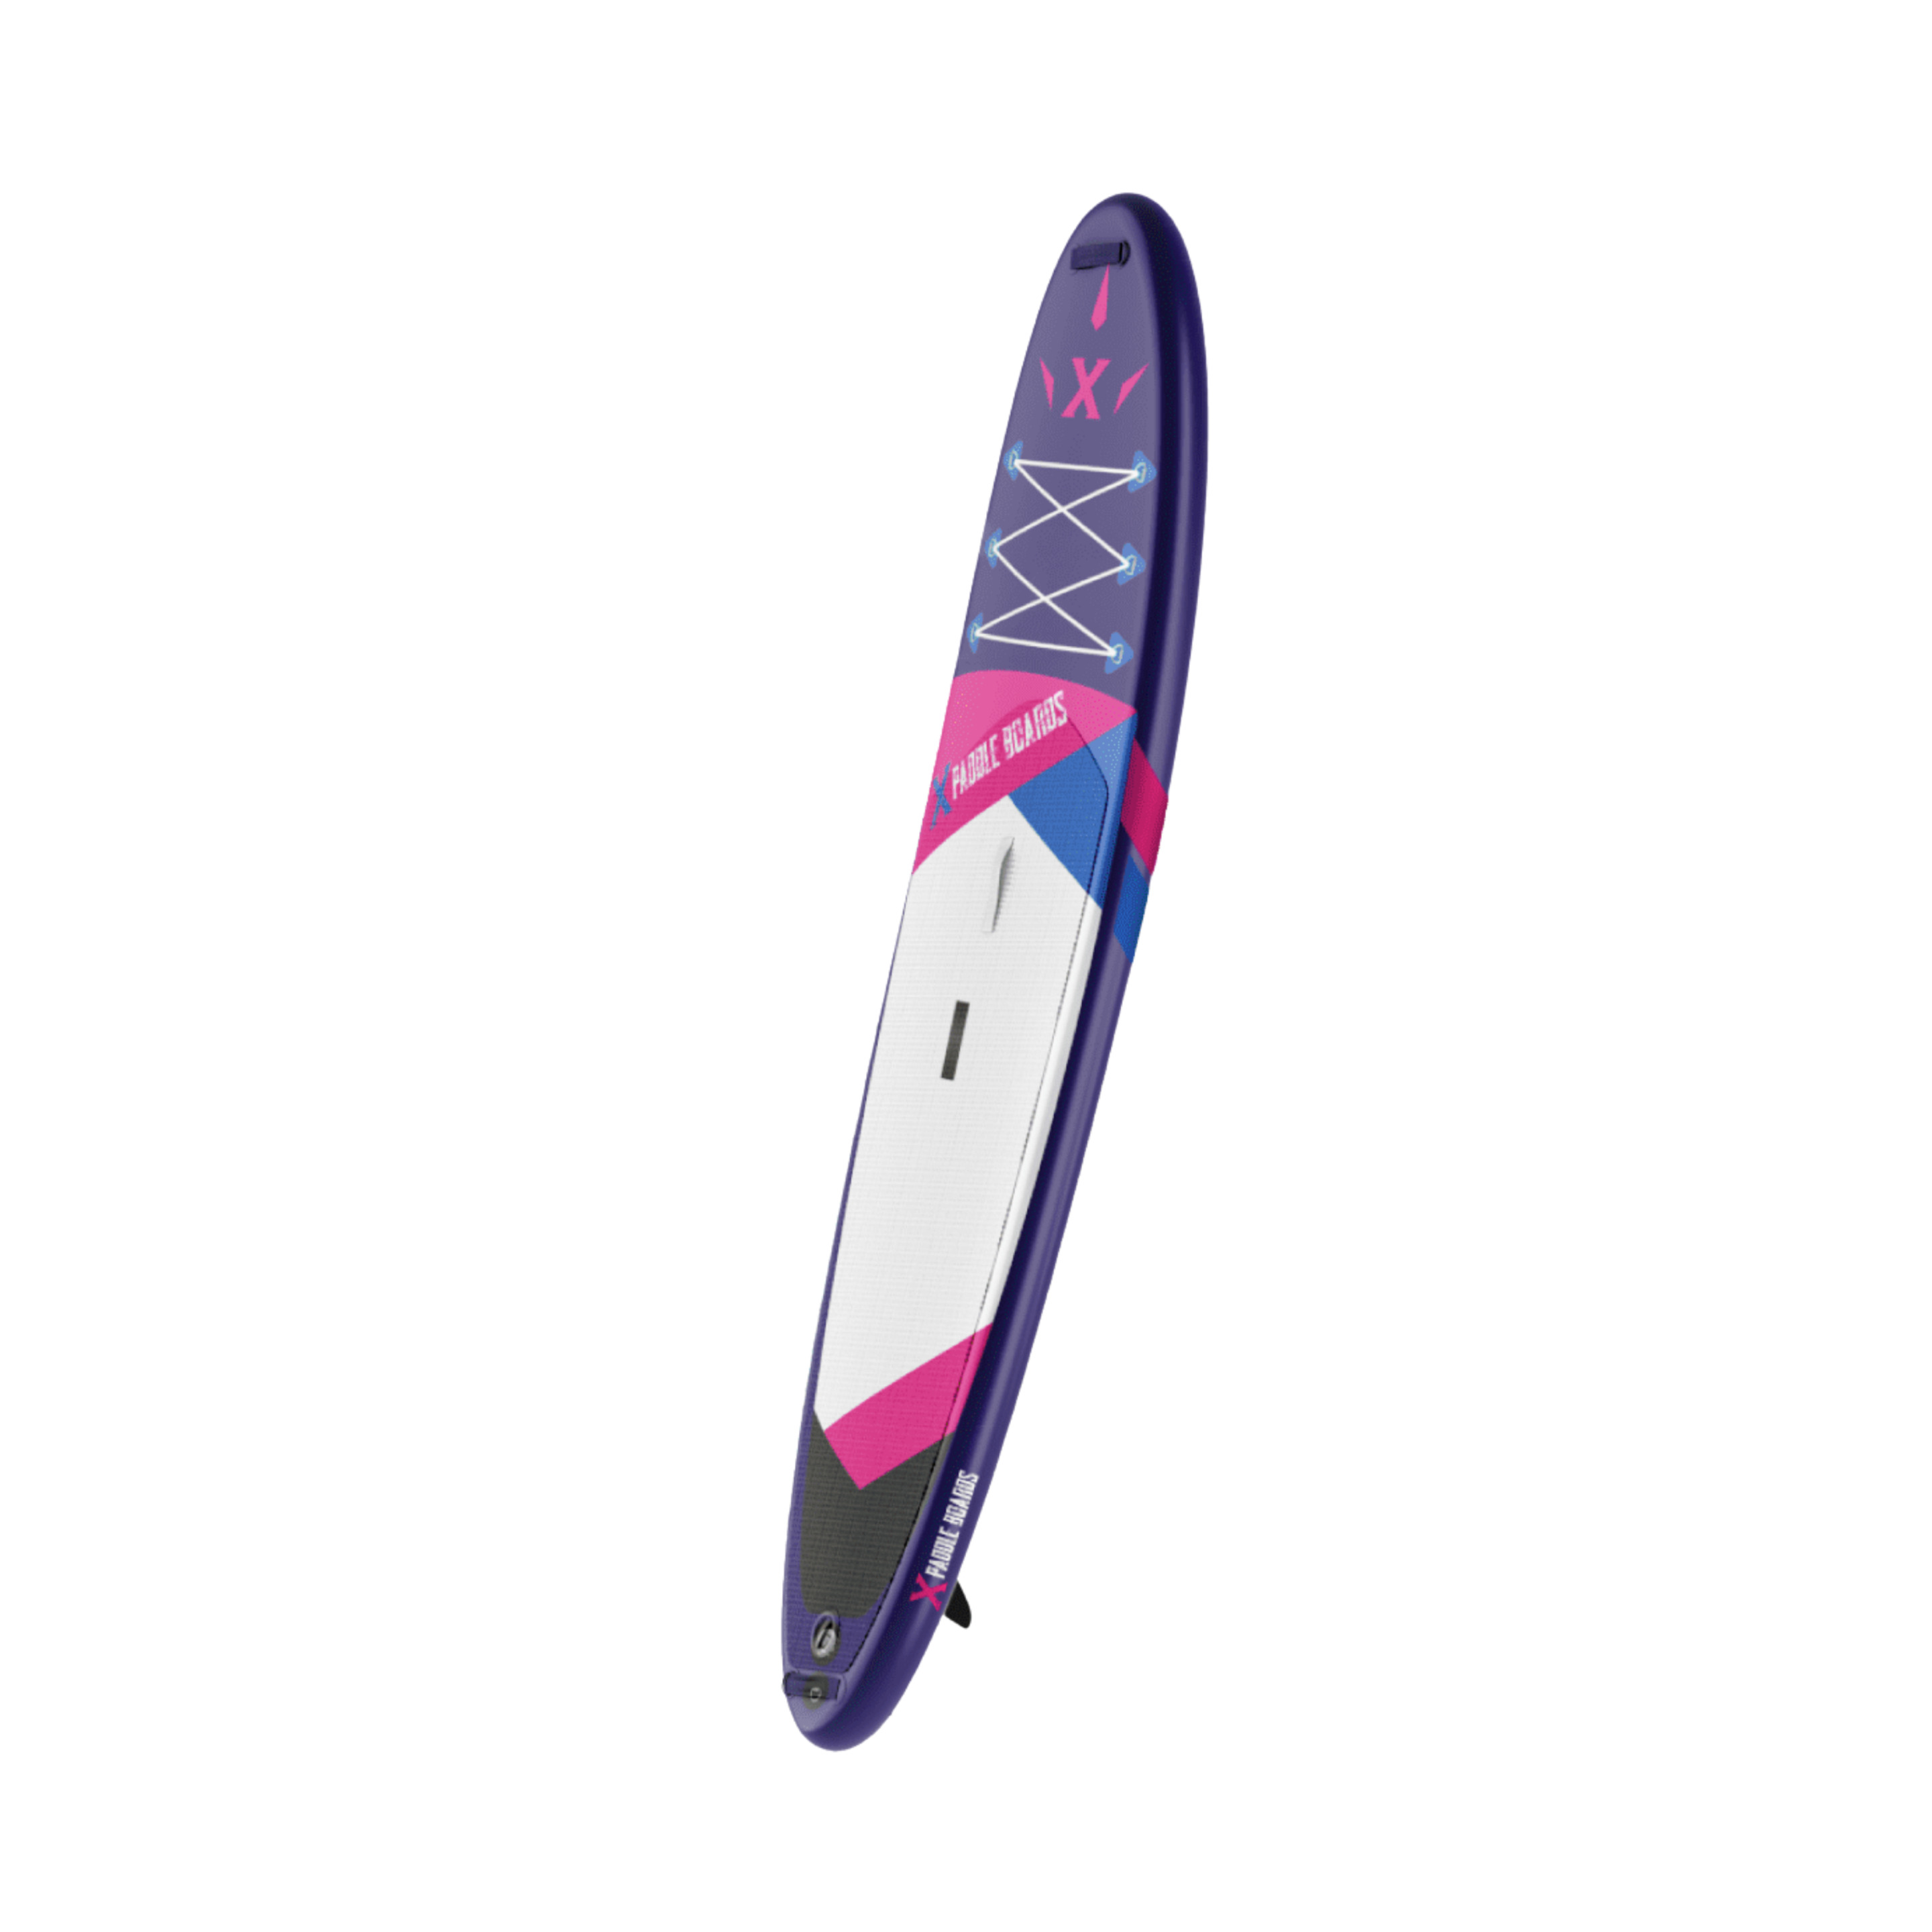 Tabla De Paddle Surf Hinchable X2 305 X 82 X 15cm - Negro/Morado  MKP